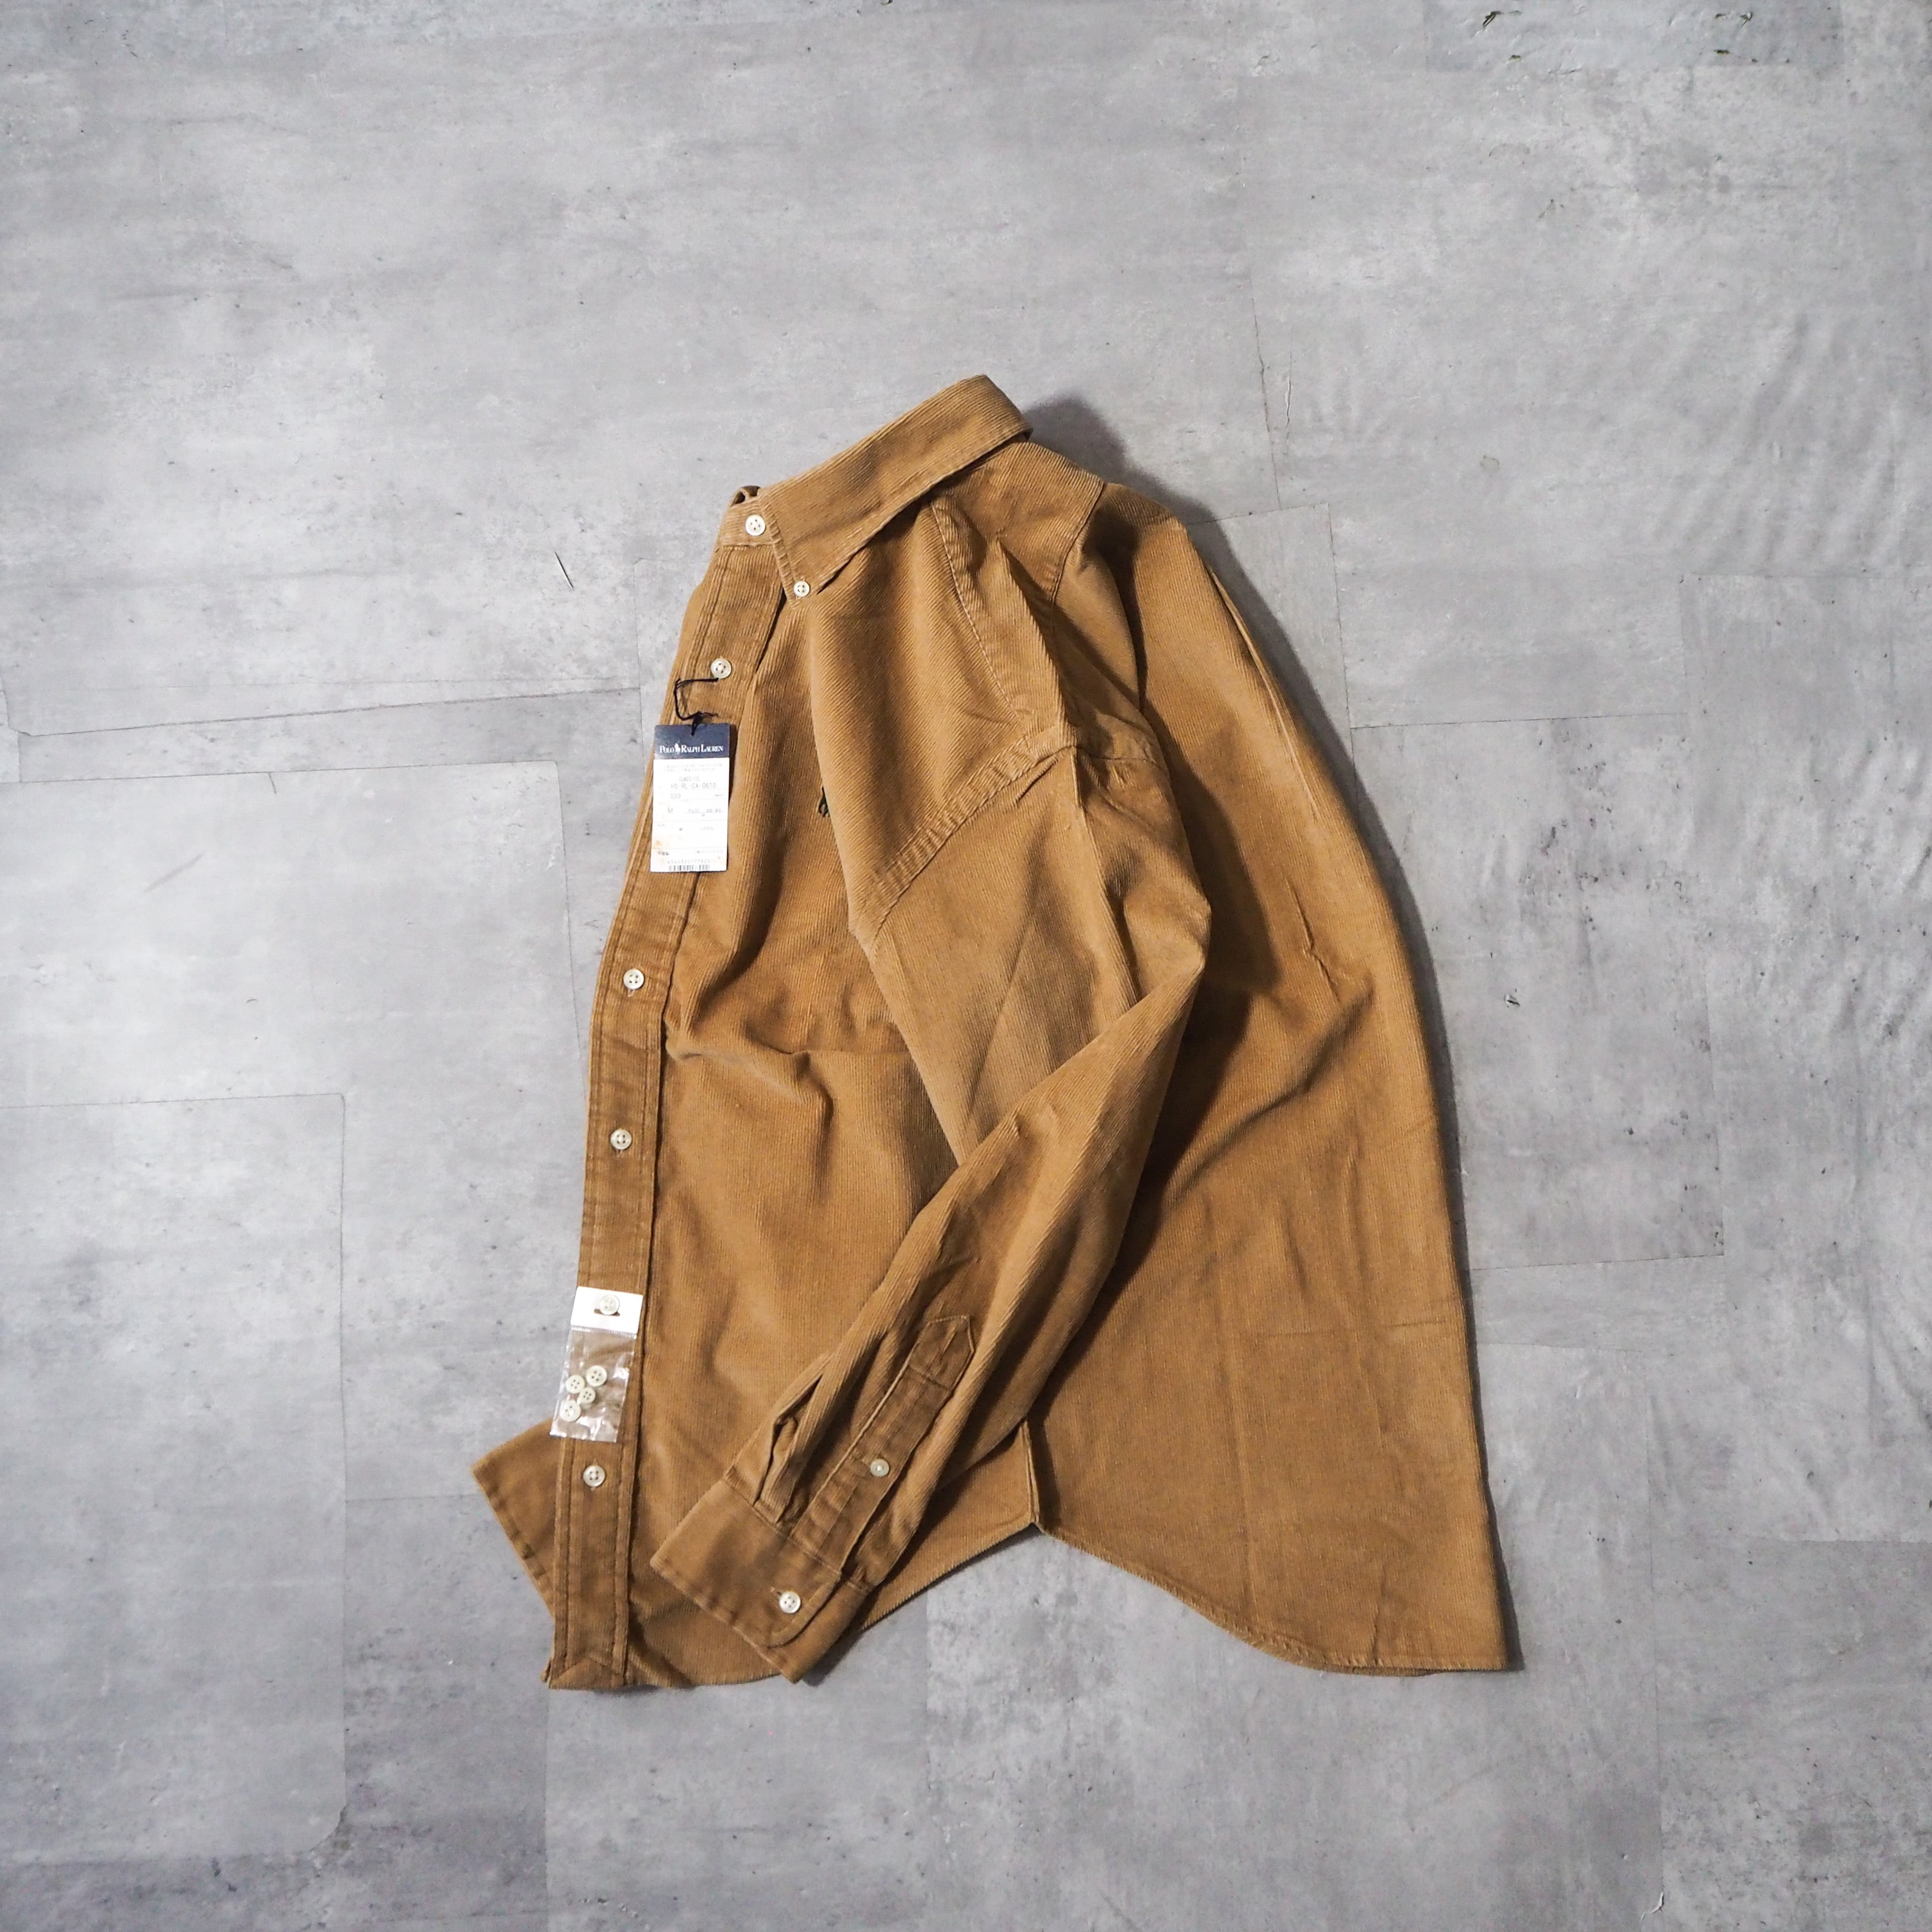 90s-00s “polo by ralph lauren” brown corduroy B.D. shirt dead